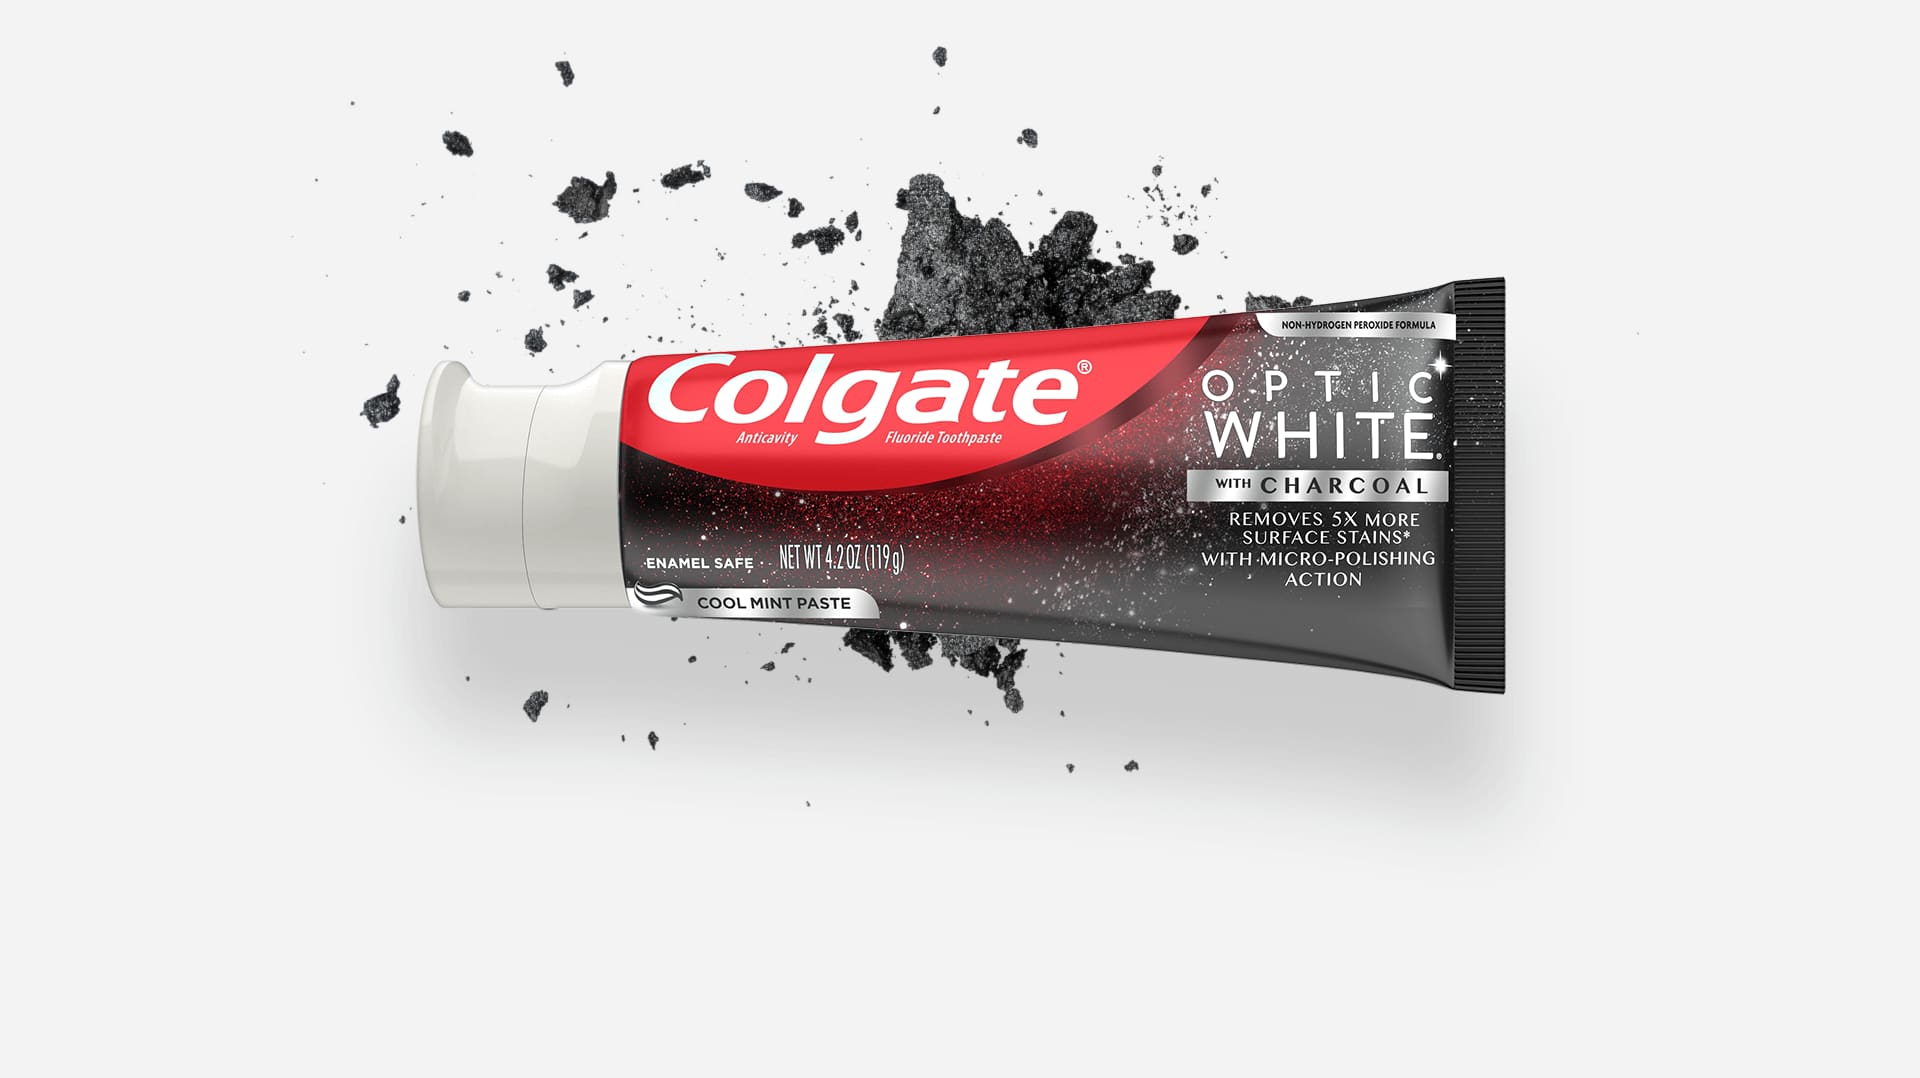 Colgate Optic White Charcoal